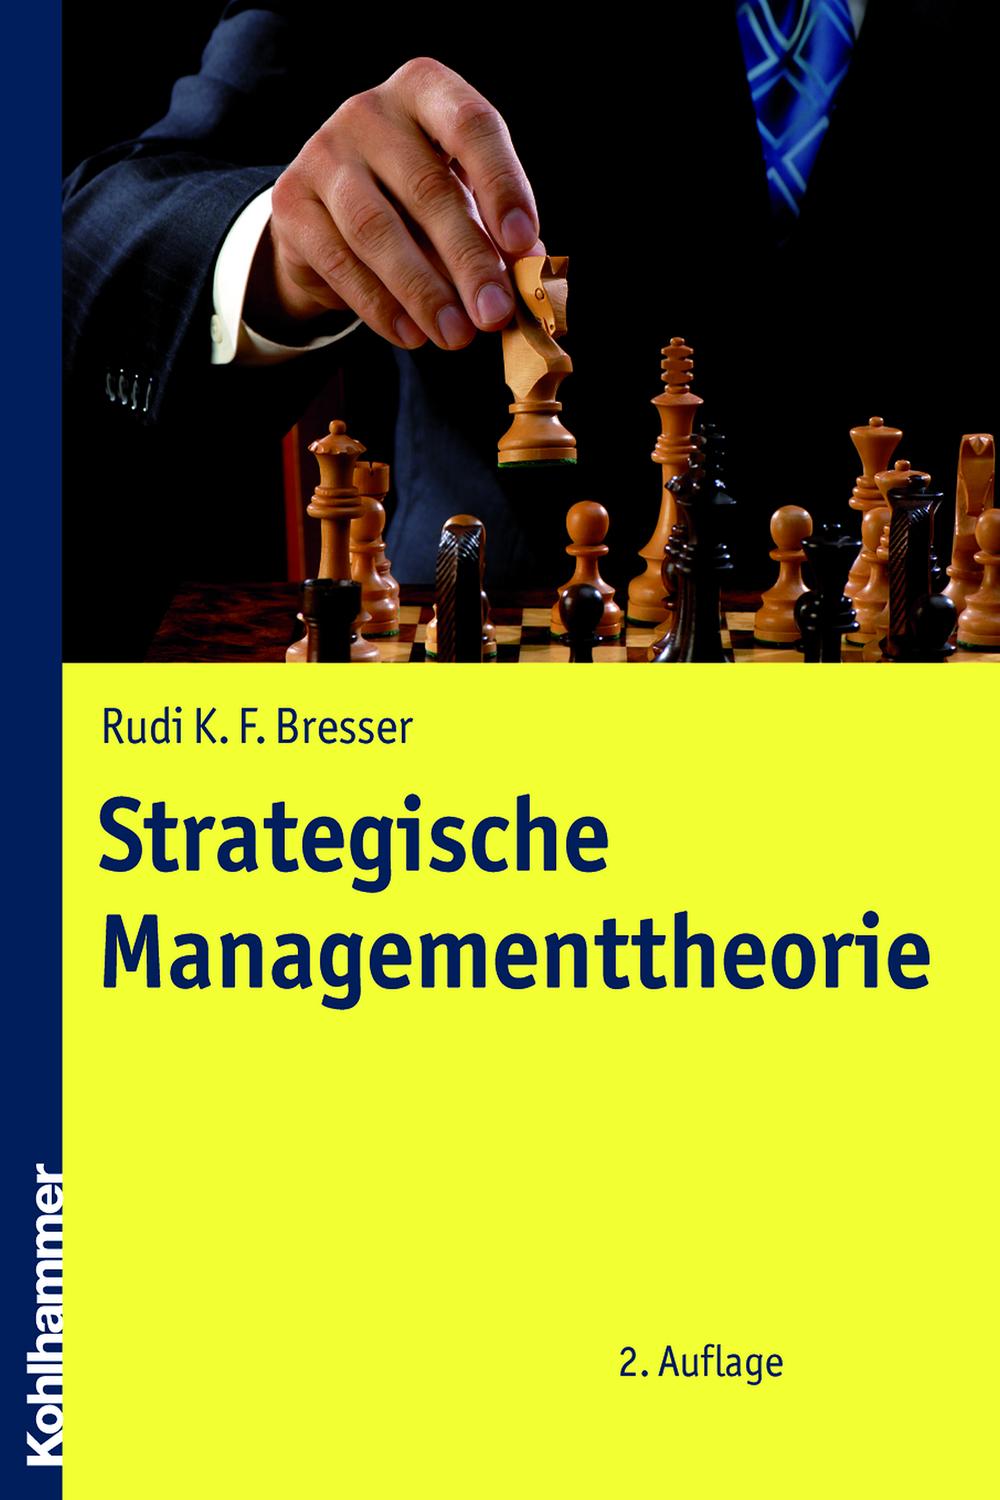 Strategische Managementtheorie - Rudi Bresser,,